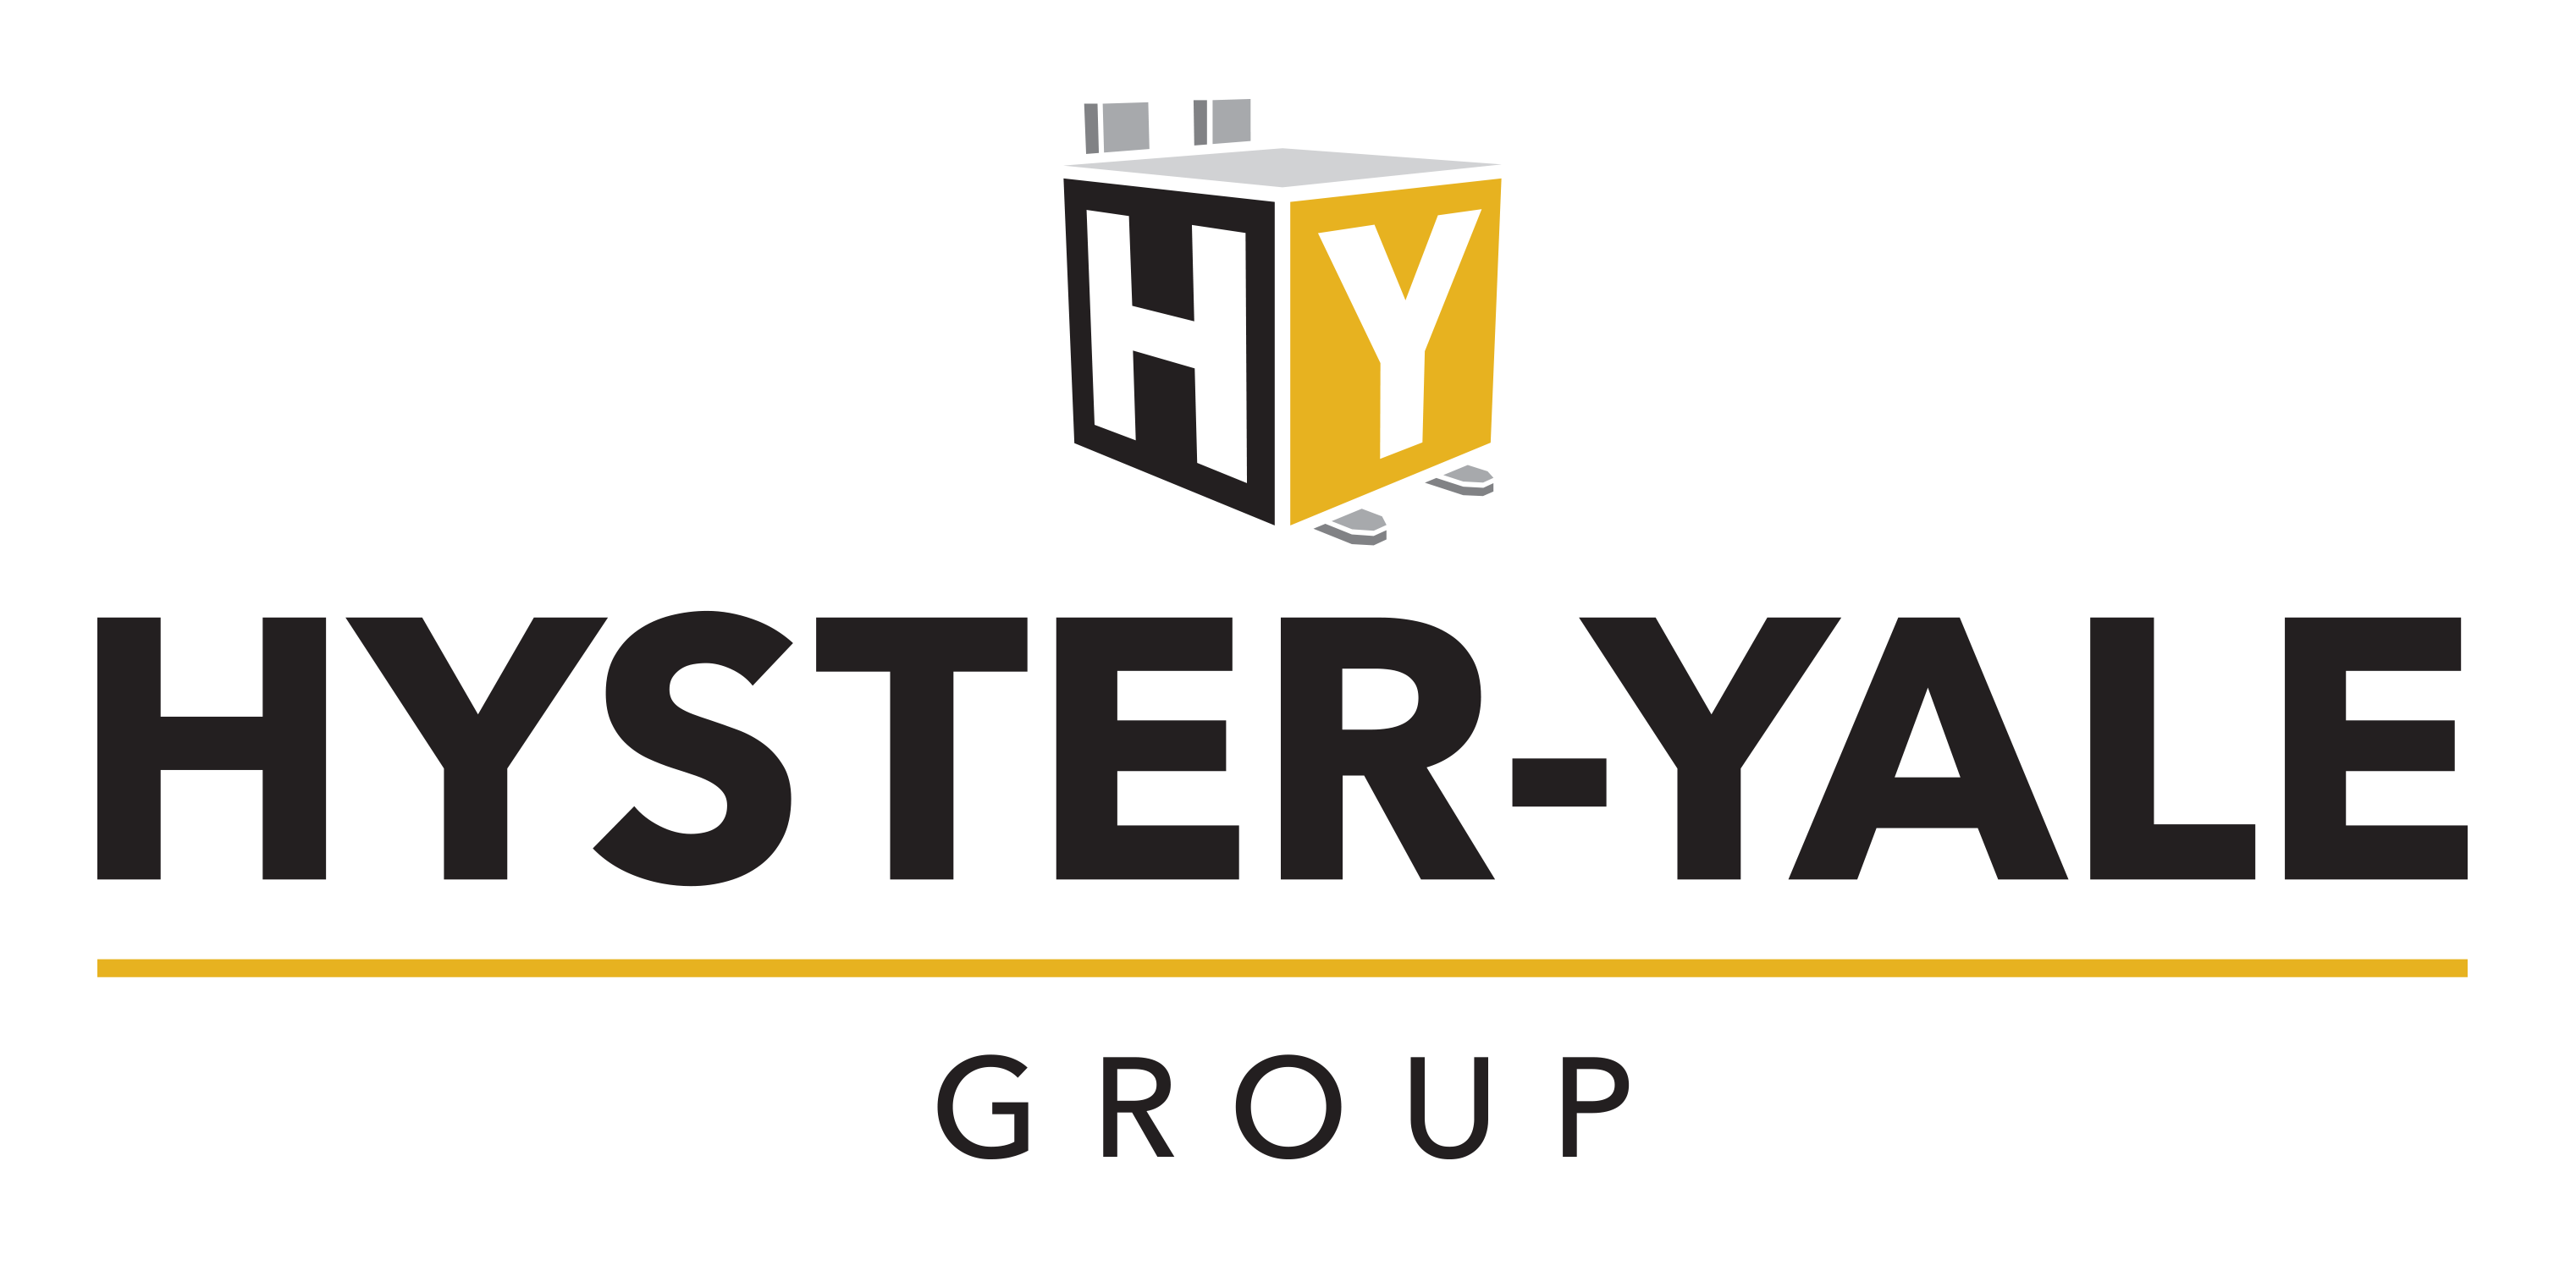 Hyster-Yale Group la